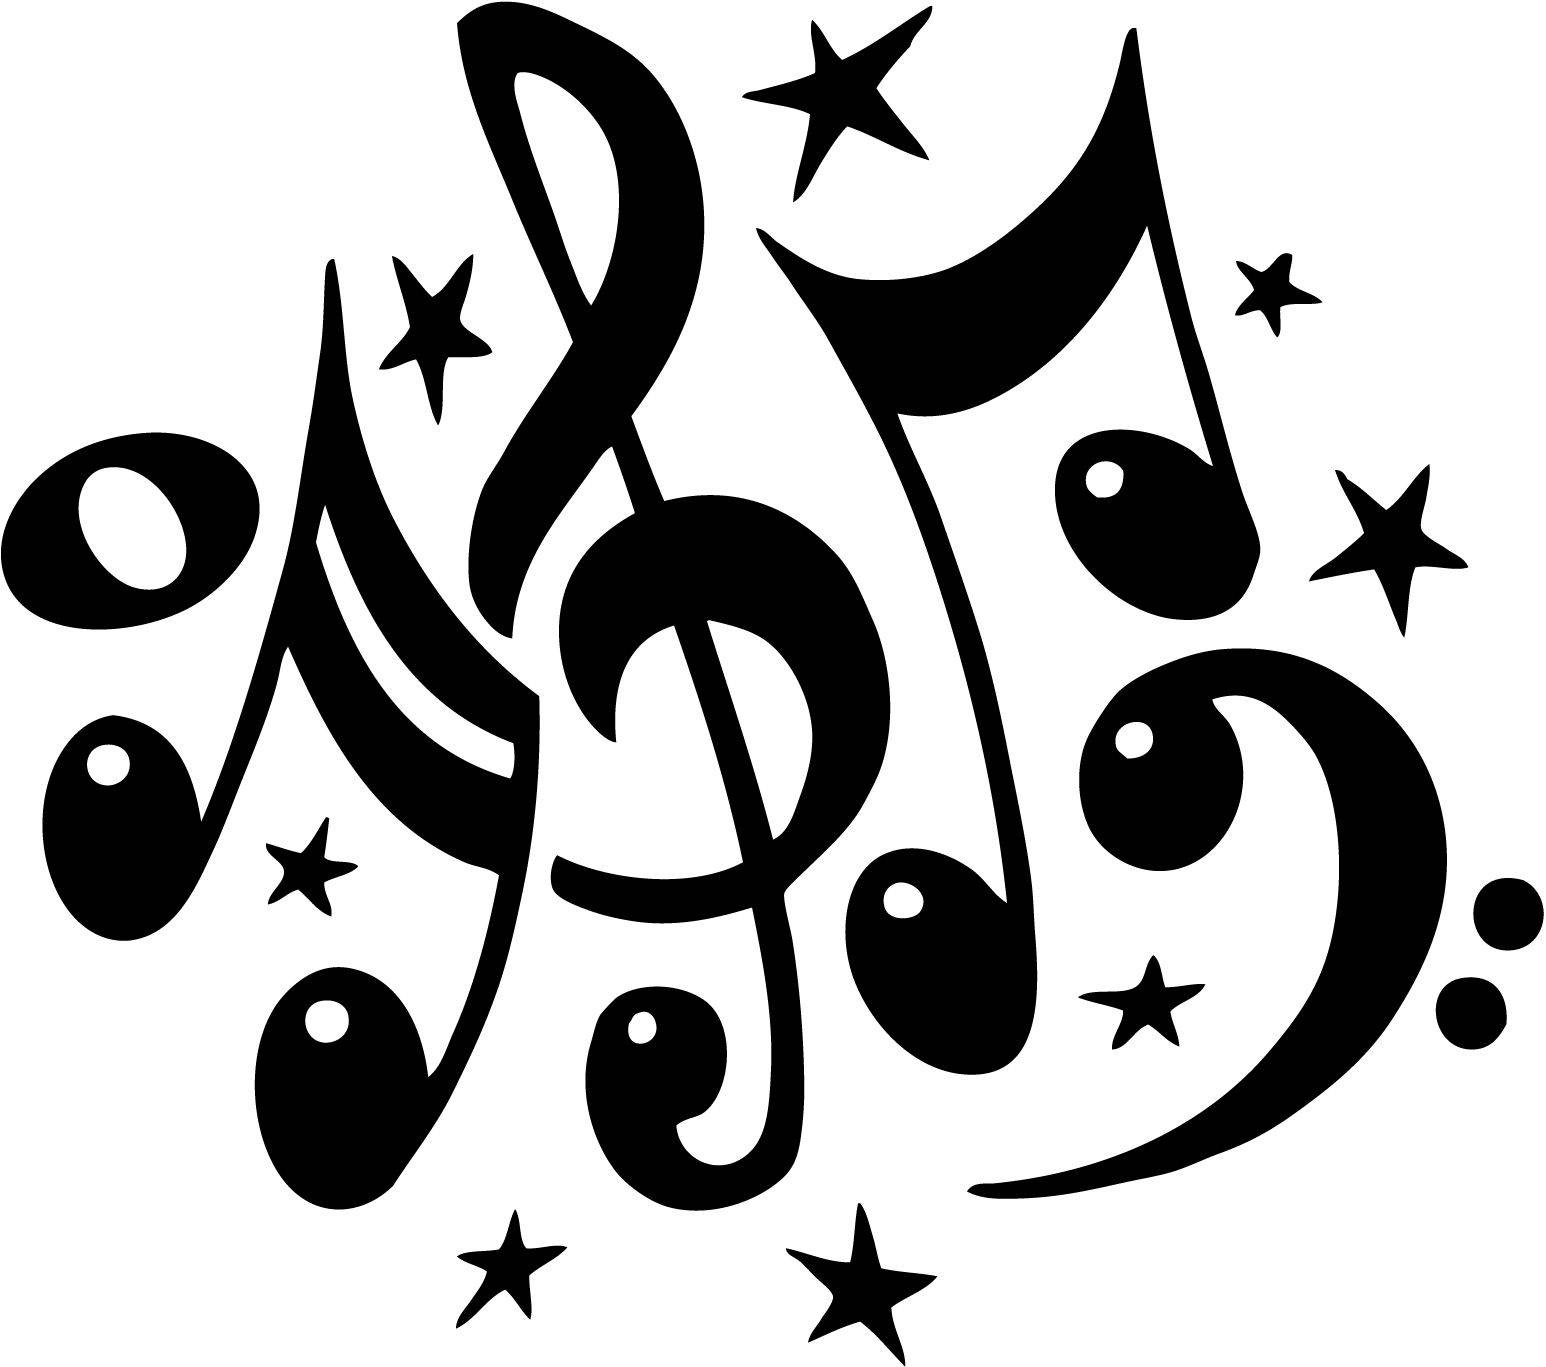 Musiksymbolemit Sternen Wallpaper